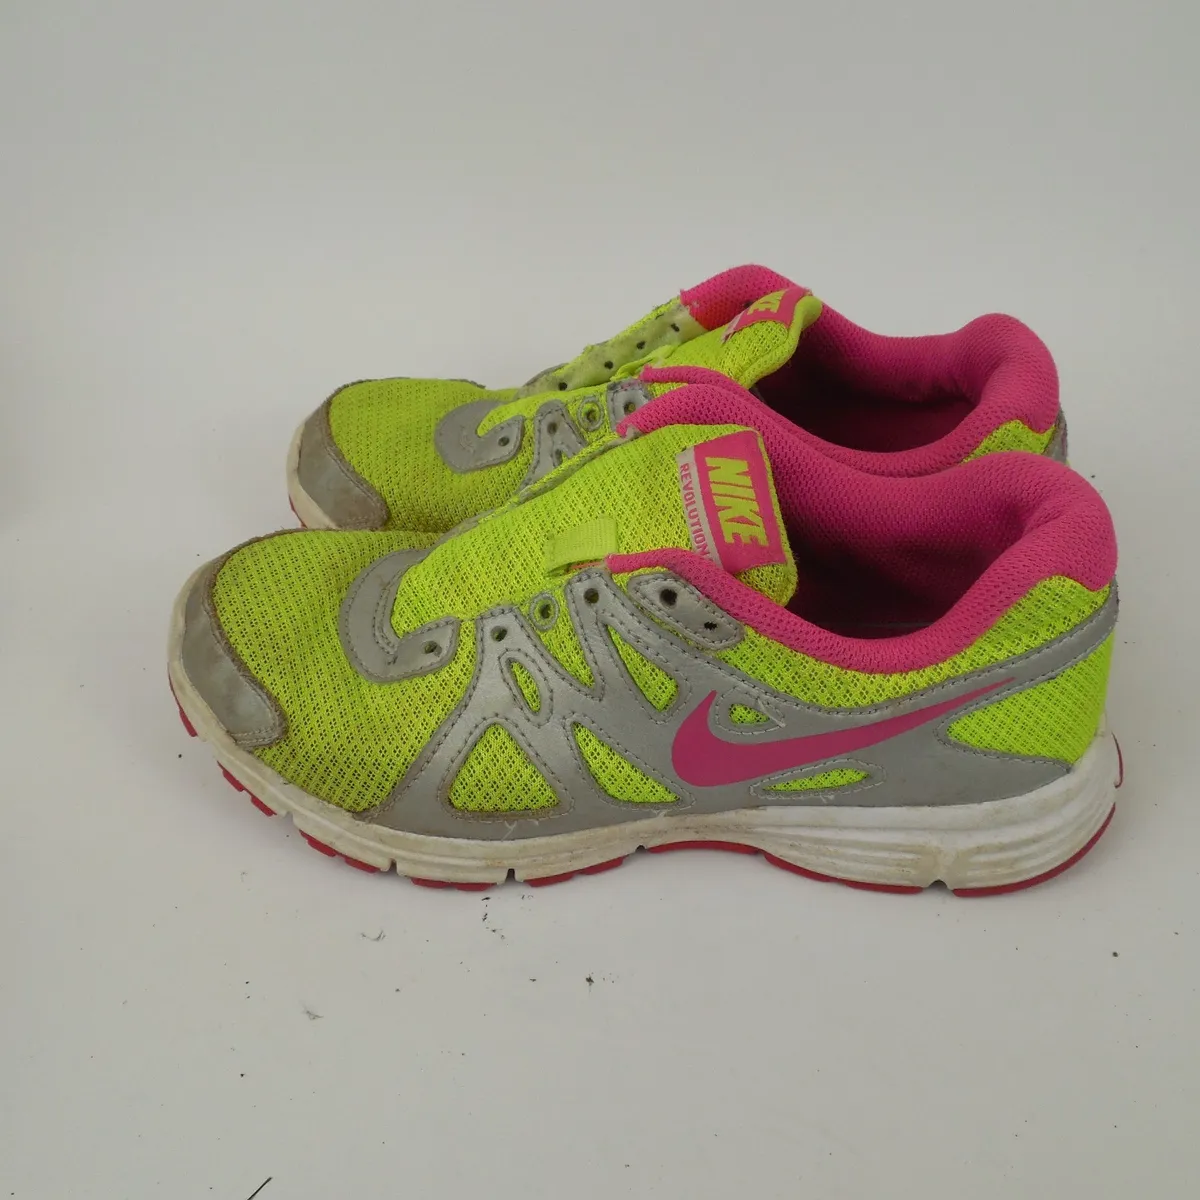 NIKE REVOLUTION 2 Running Shoes Neon Yellow 555090-761 Girls 4.5 Youth Used | eBay